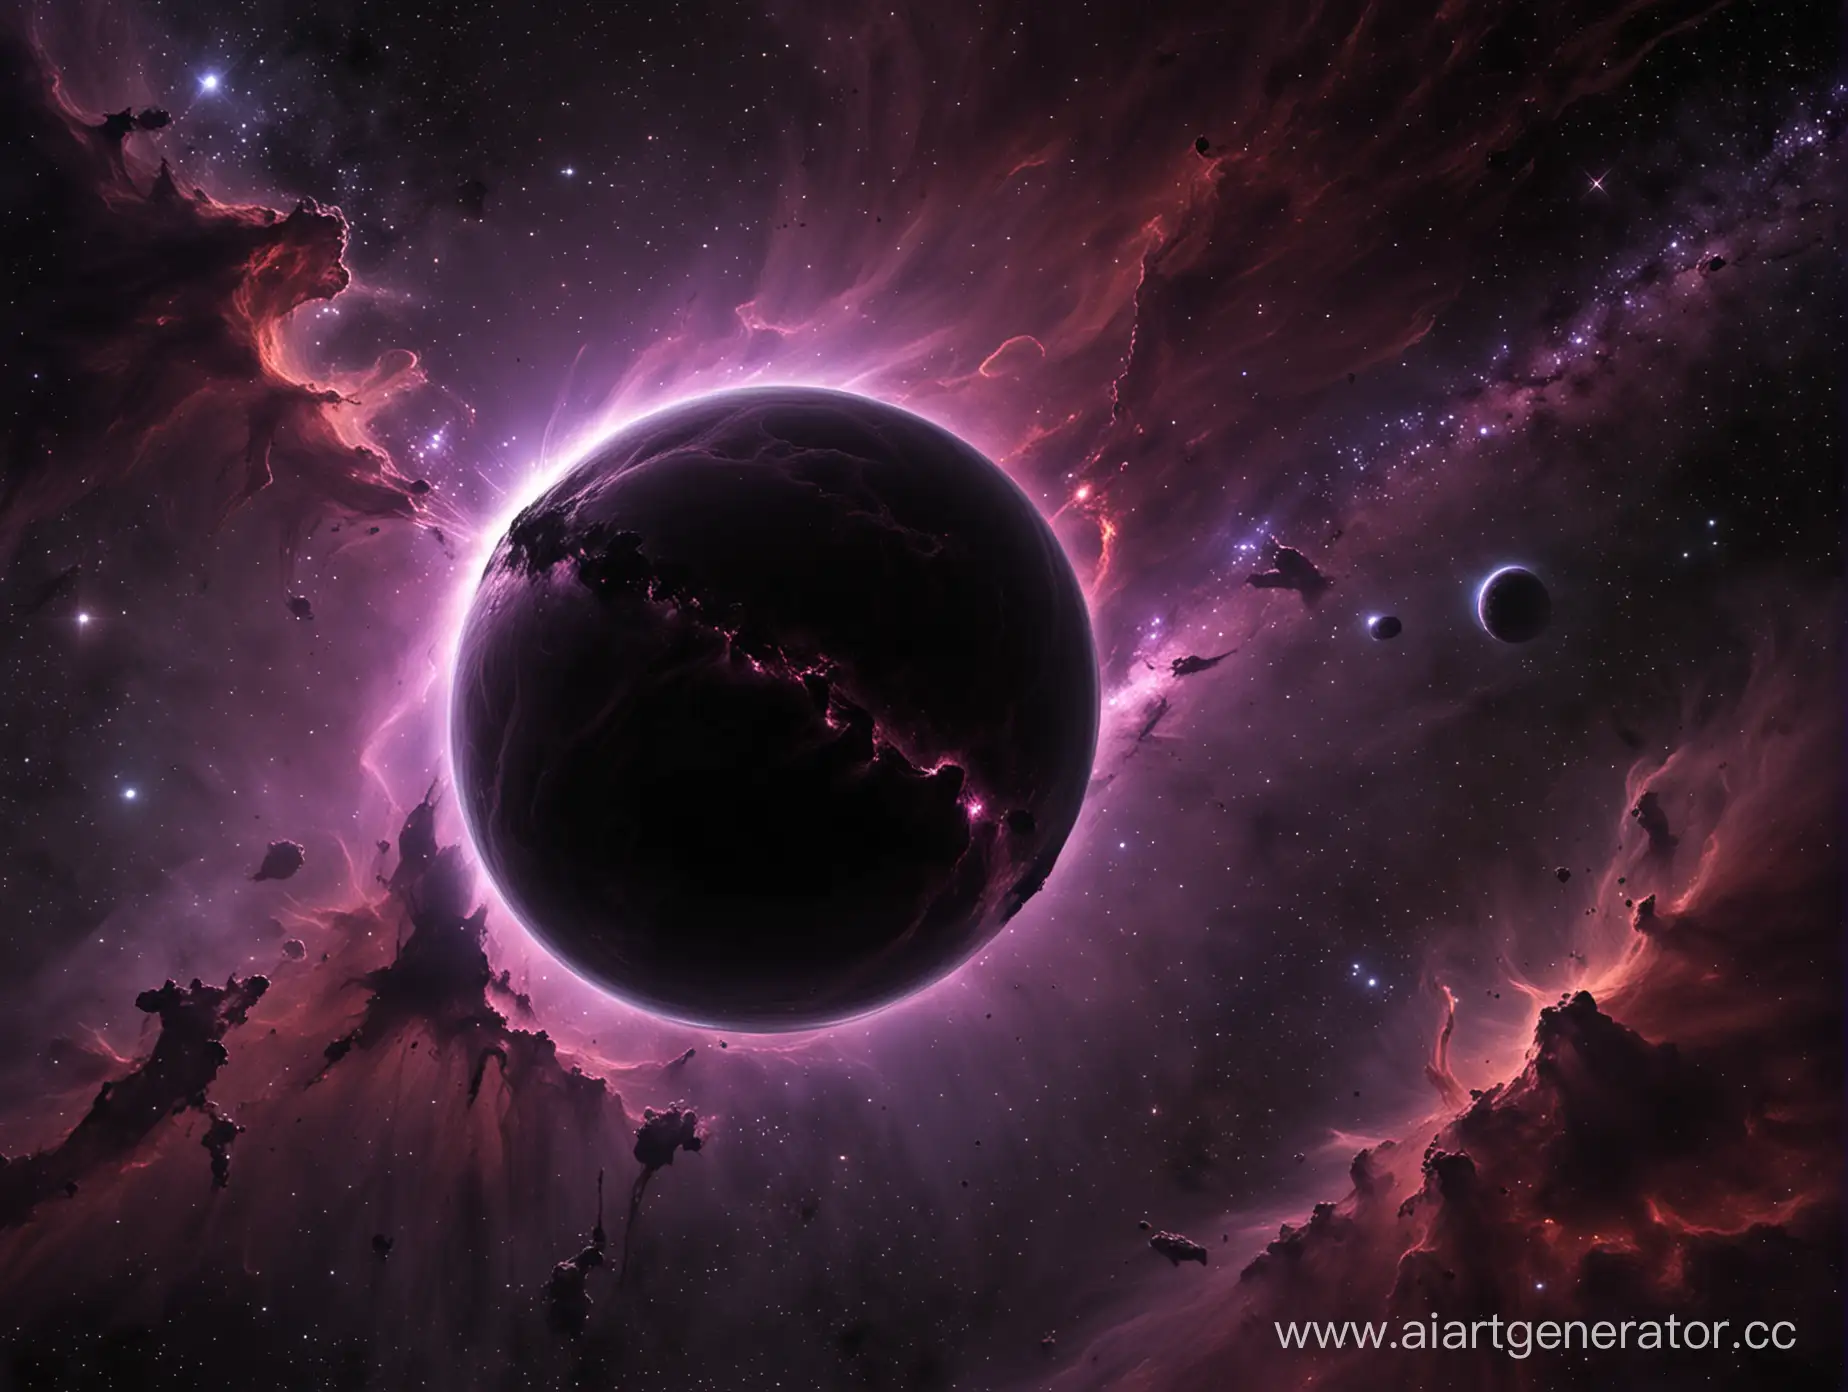 Giant-BlackPurple-Sphere-Entering-Vast-Dark-Nebula